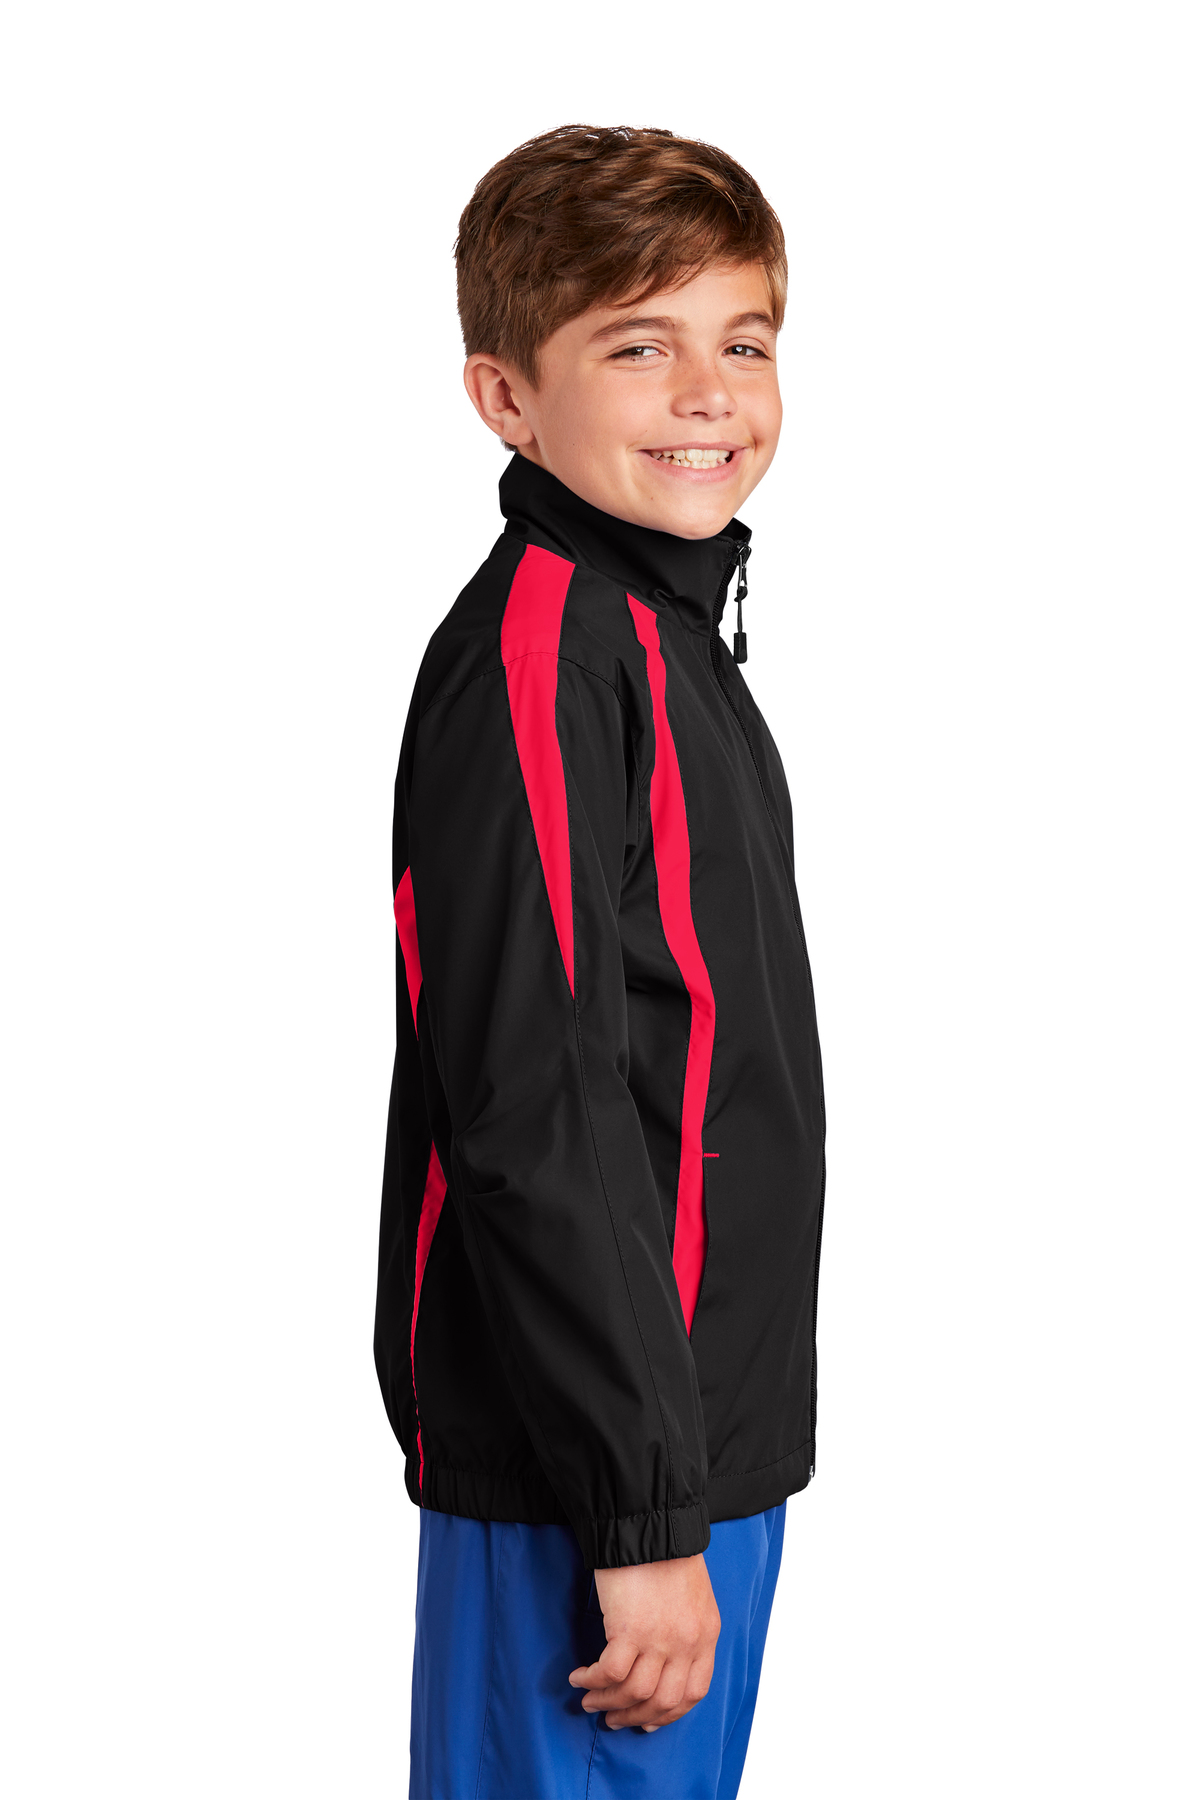 YST60 Sport-Tek Youth Colorblock Raglan Jacket